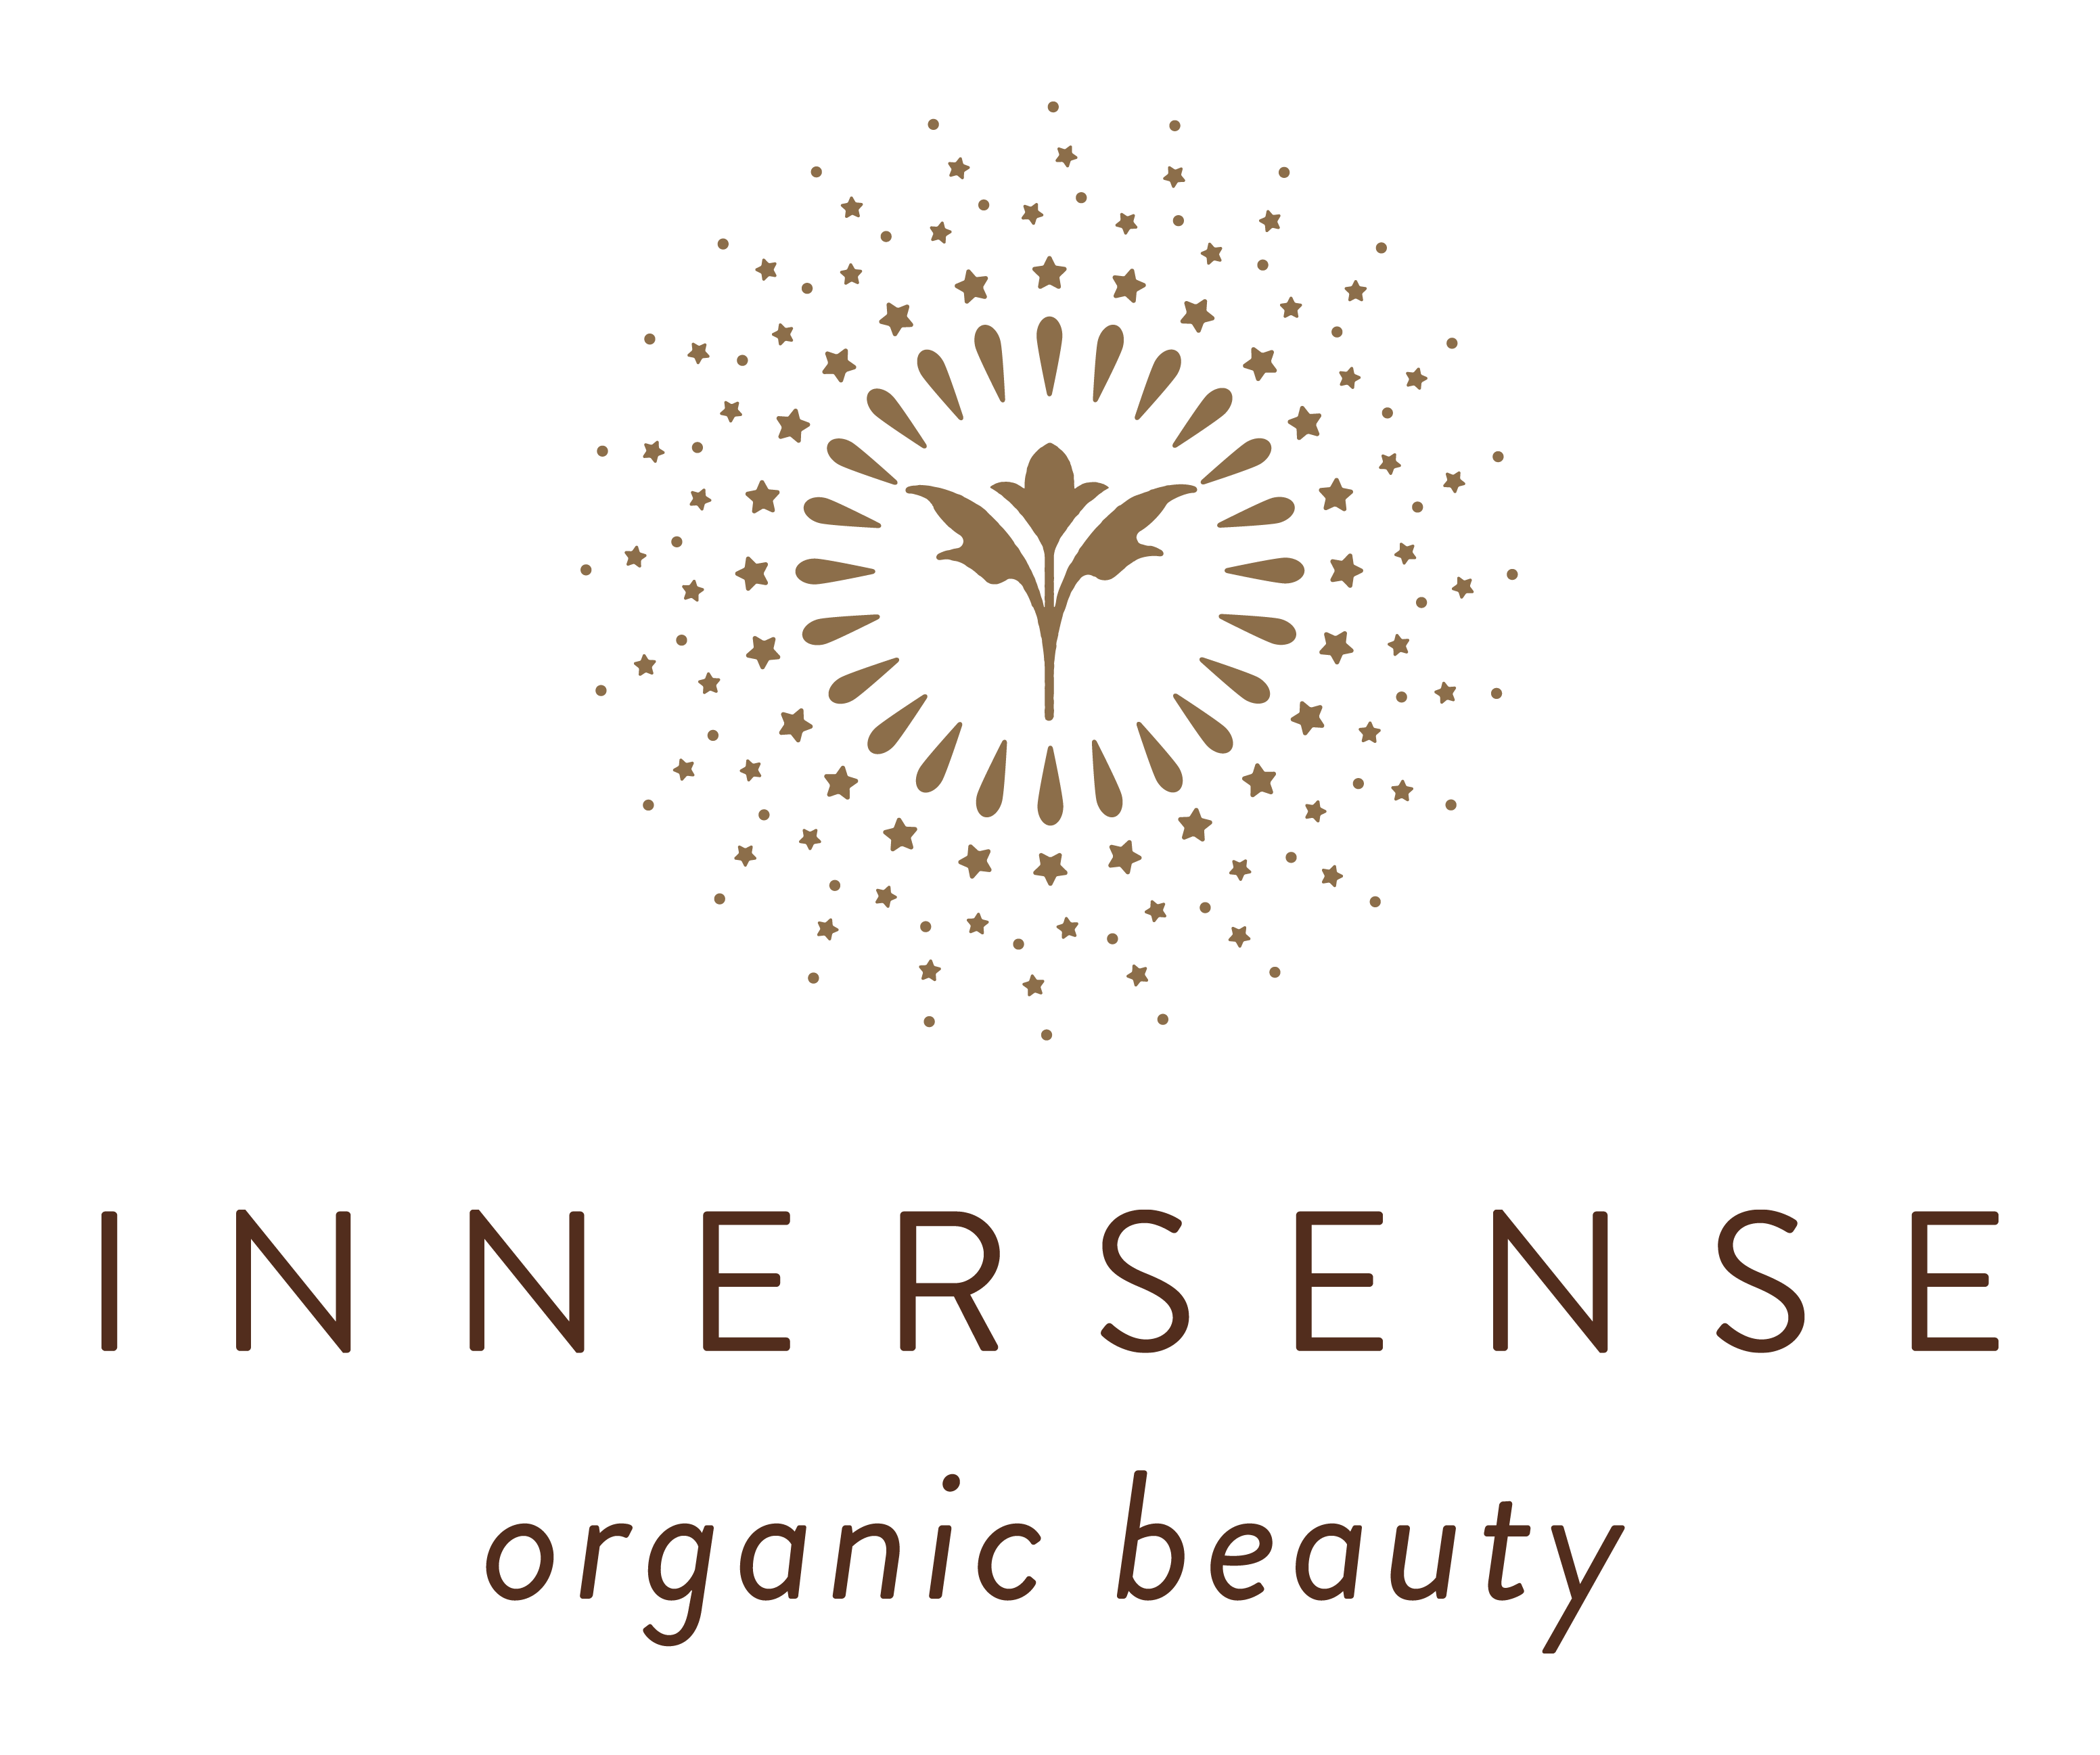 For immediate release: Infinite Salon now carries Innersense Organic Beauty